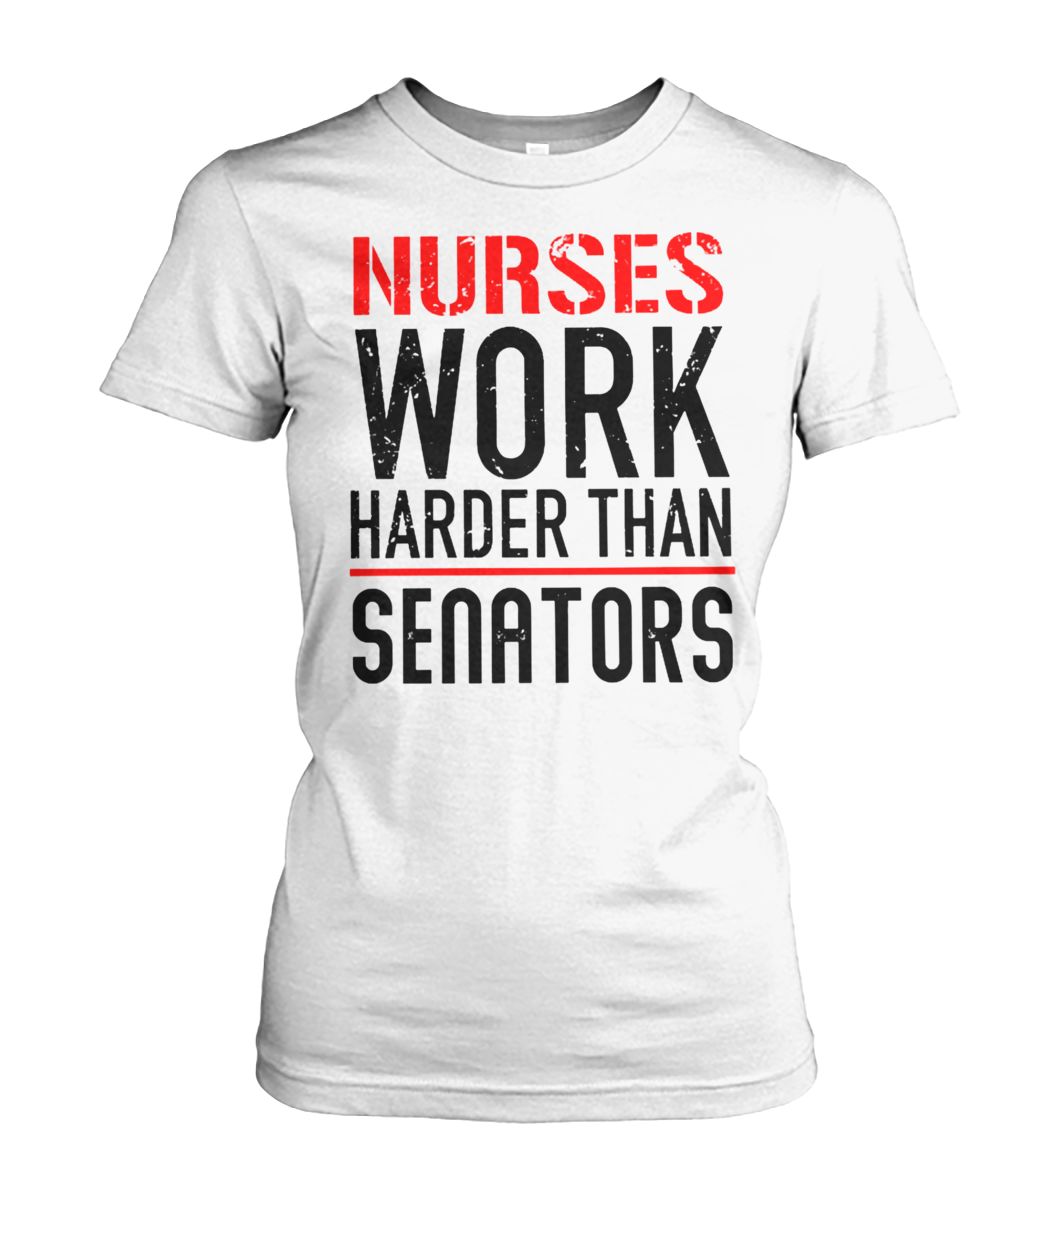 Nurses work harder than senators women's crew tee